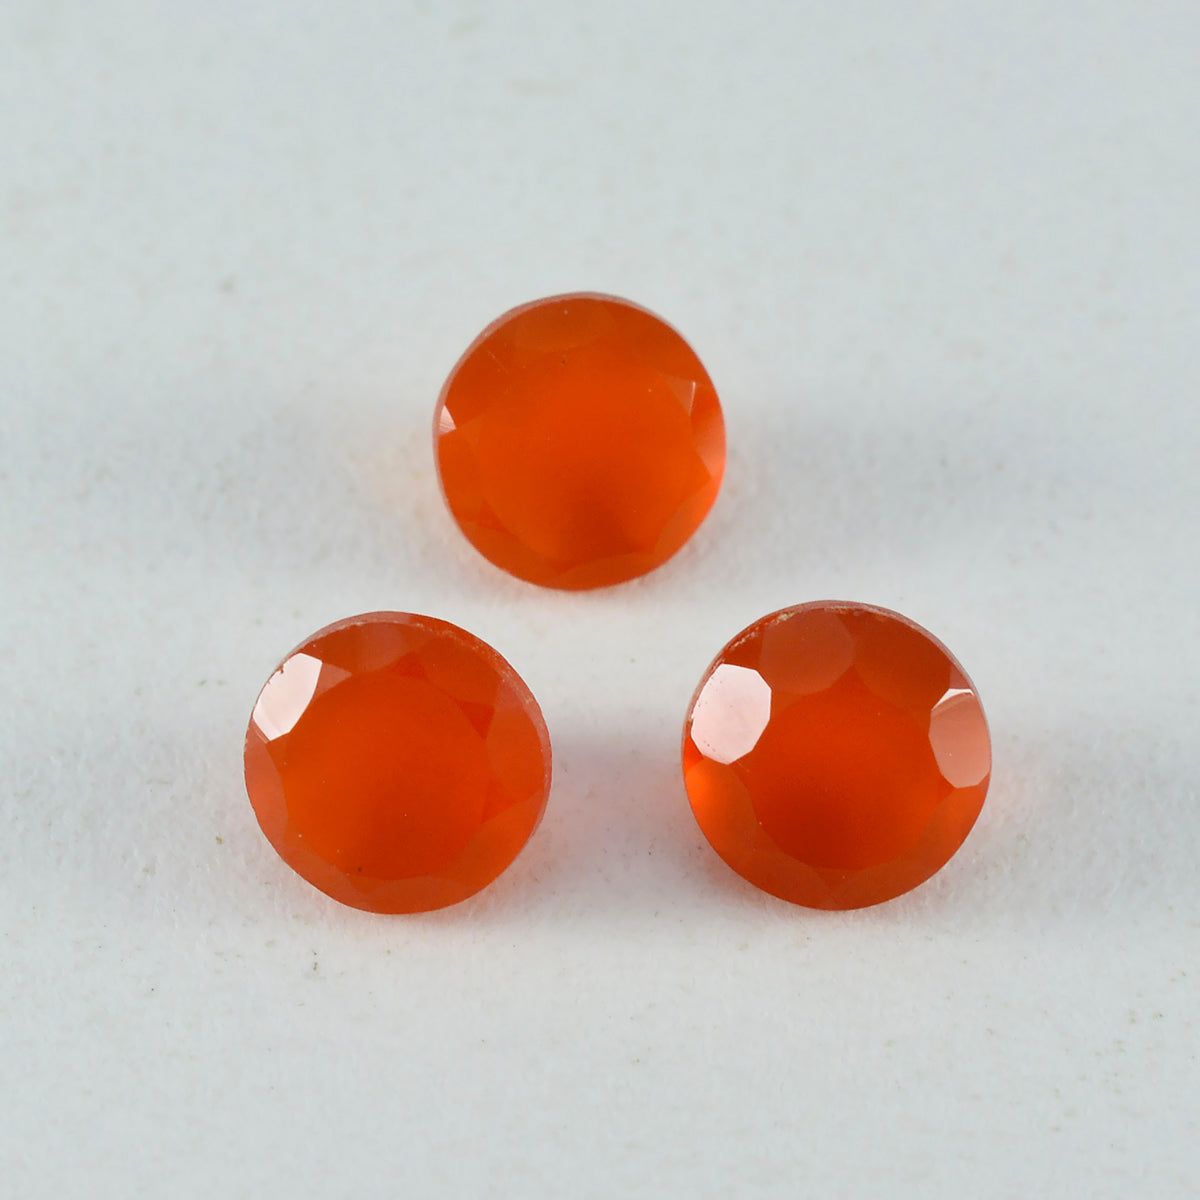 Riyogems 1PC Genuine Red Onyx Faceted 10x10 mm Round Shape Nice Quality Gemstone